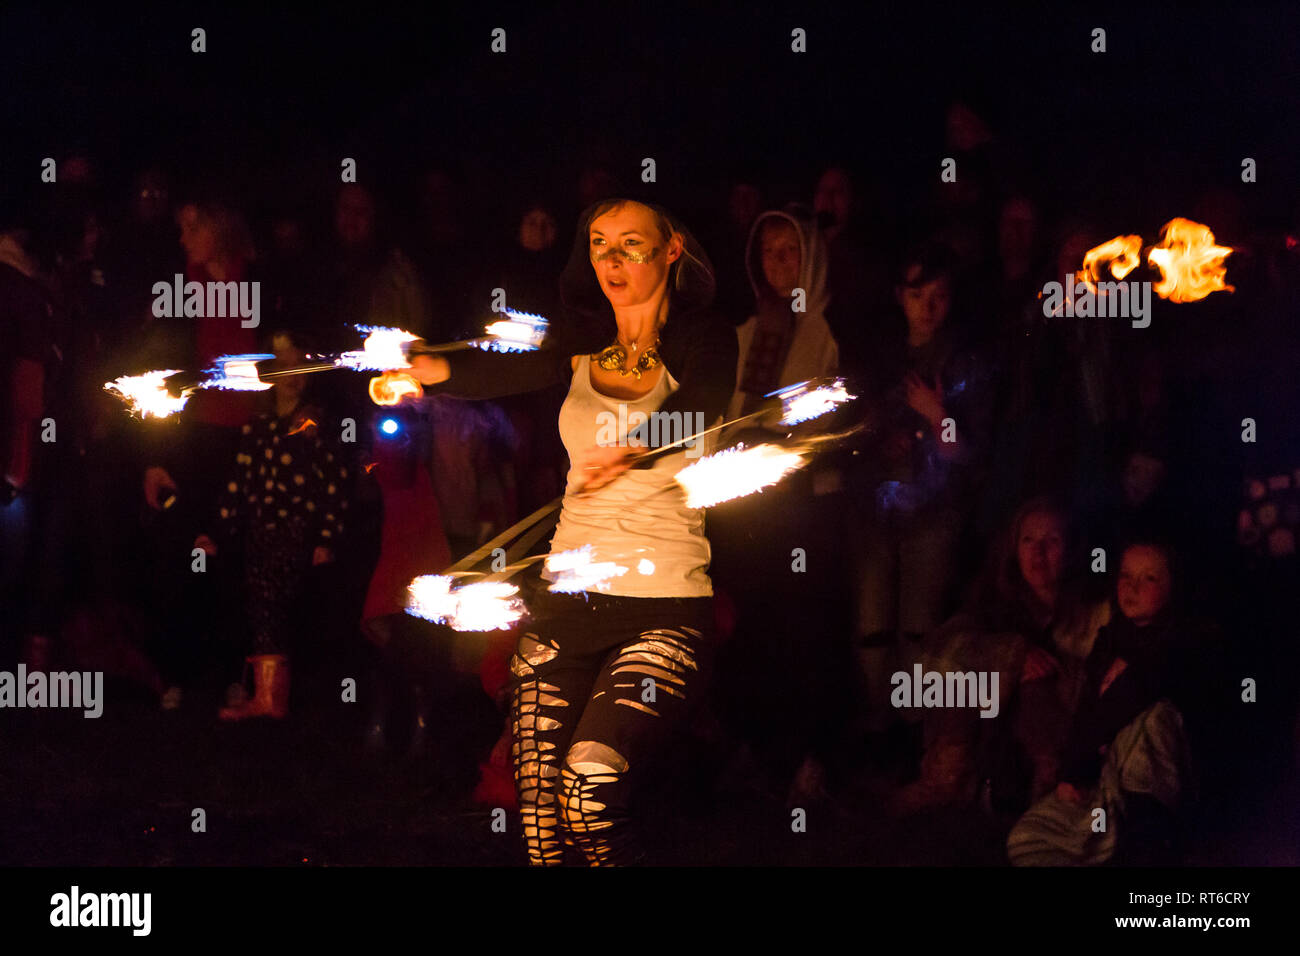 Fire dancer at Beltane Fire Festival, Sussex, UK Stock Photo